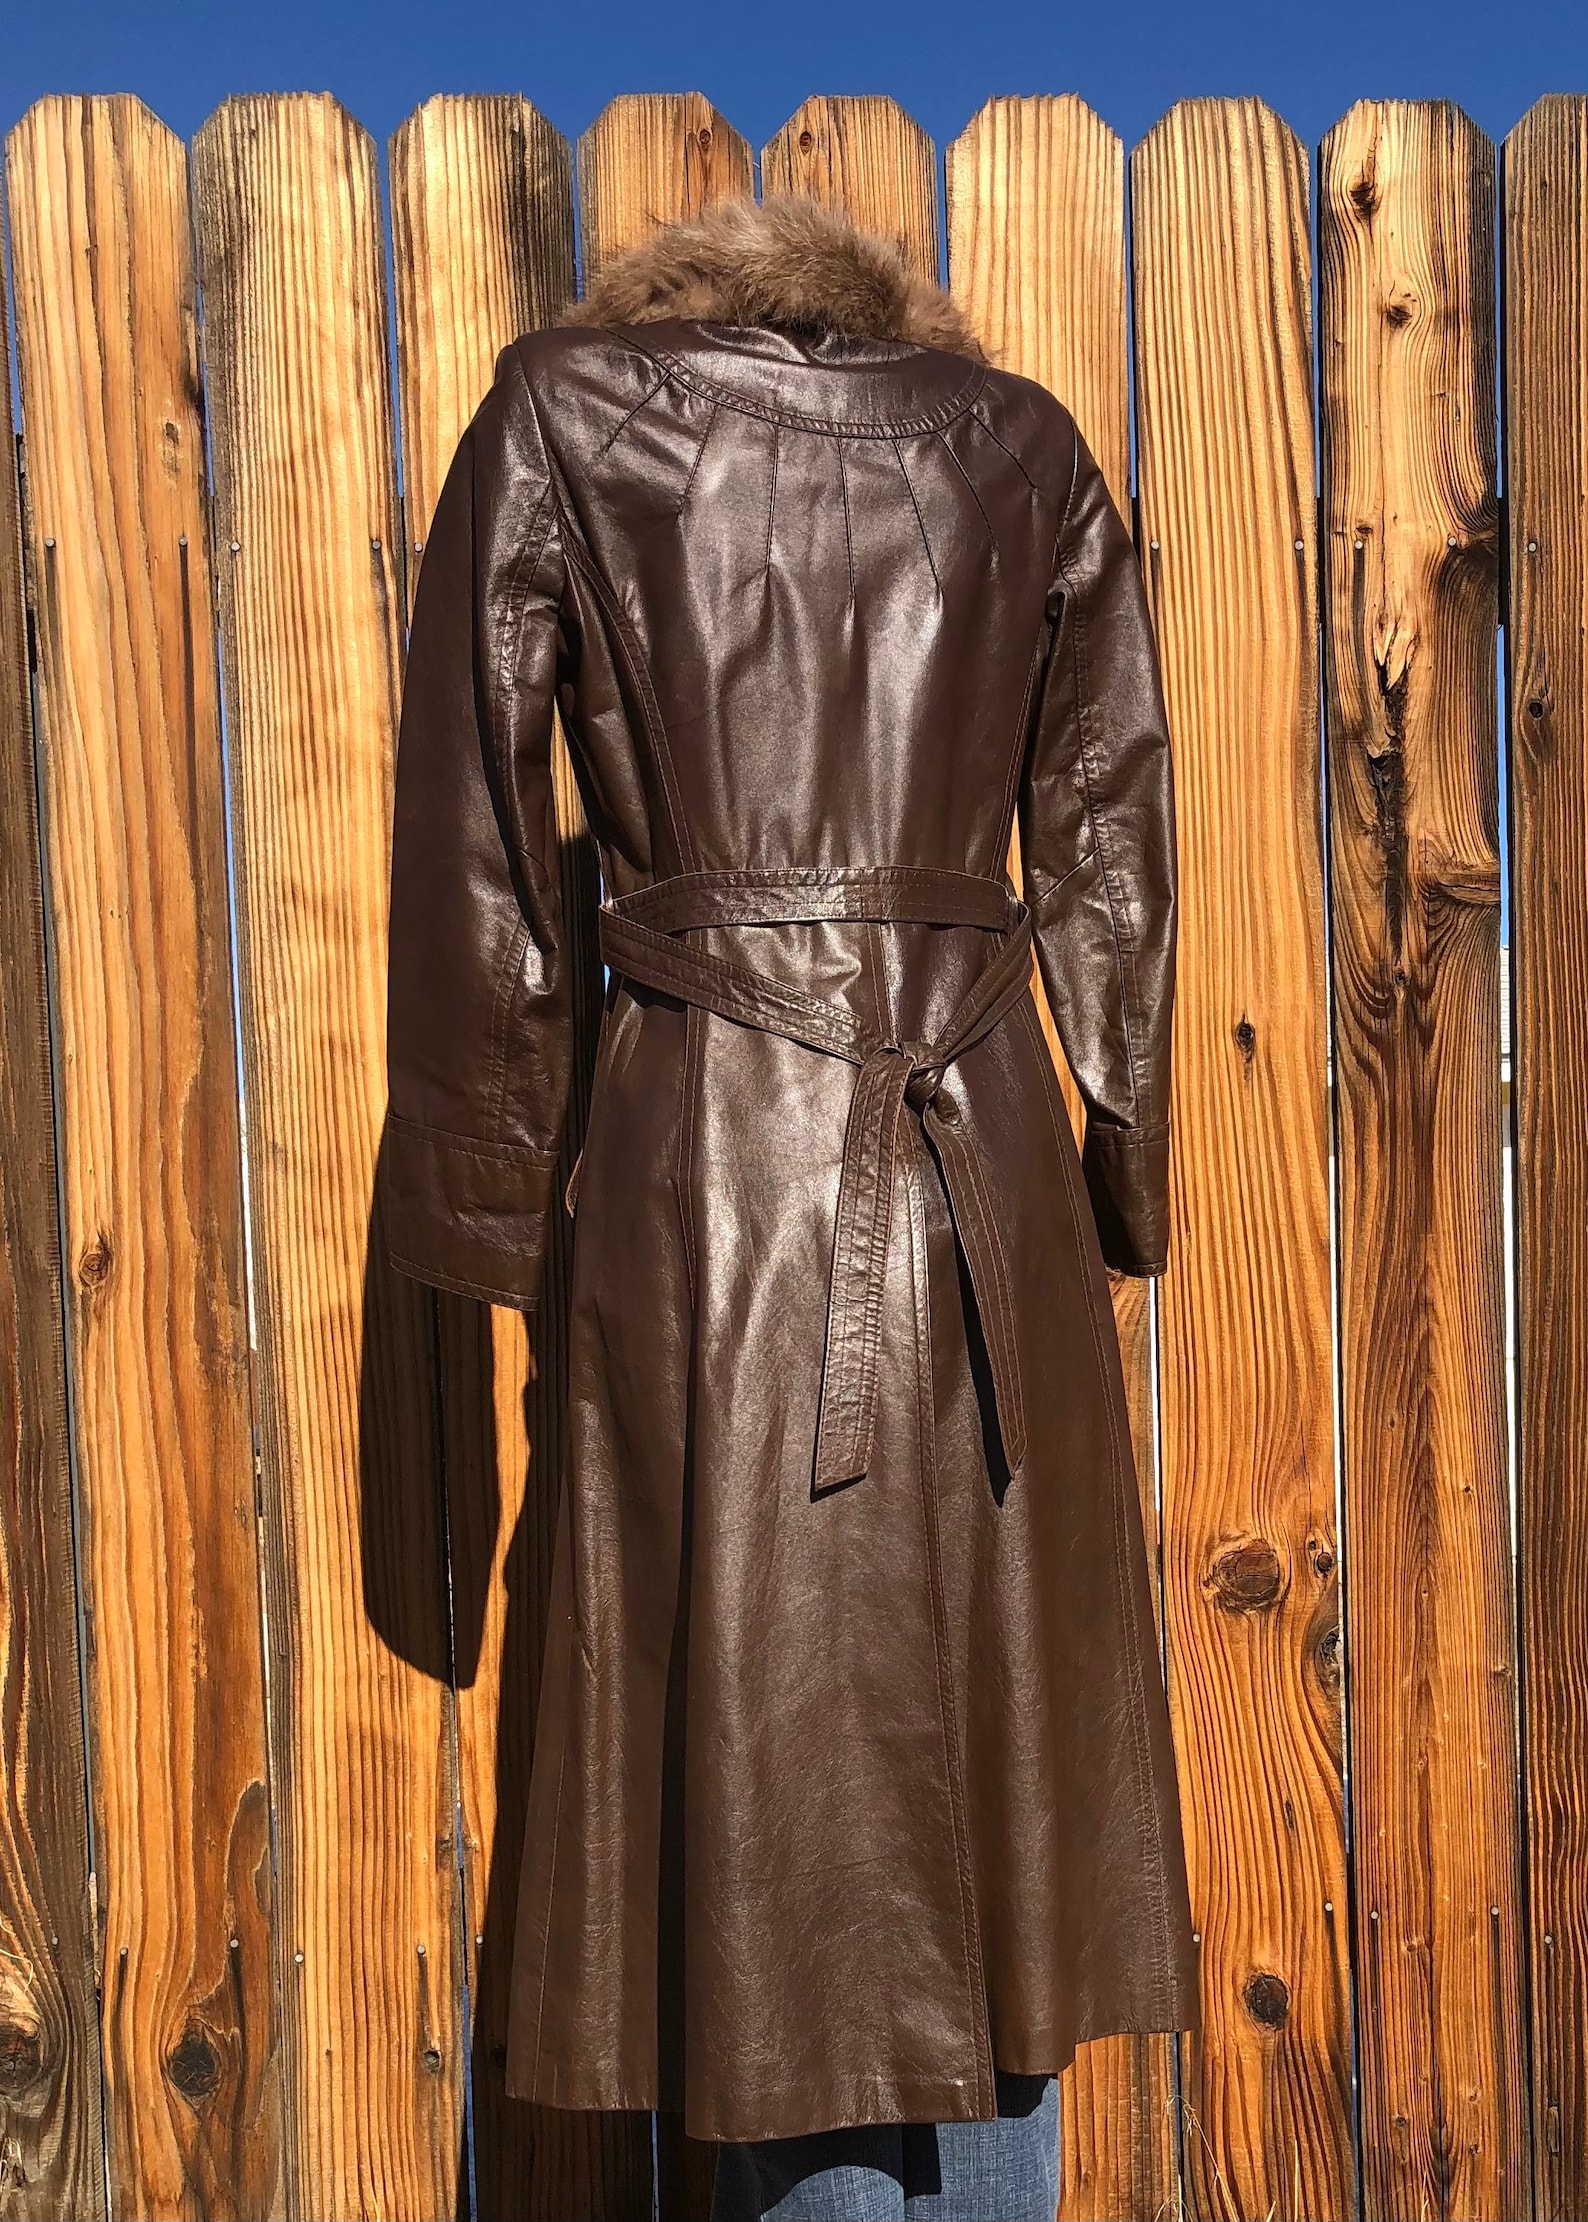 Dark Brown Long Leather Duster Jacket Coat Fur Collar | Etsy